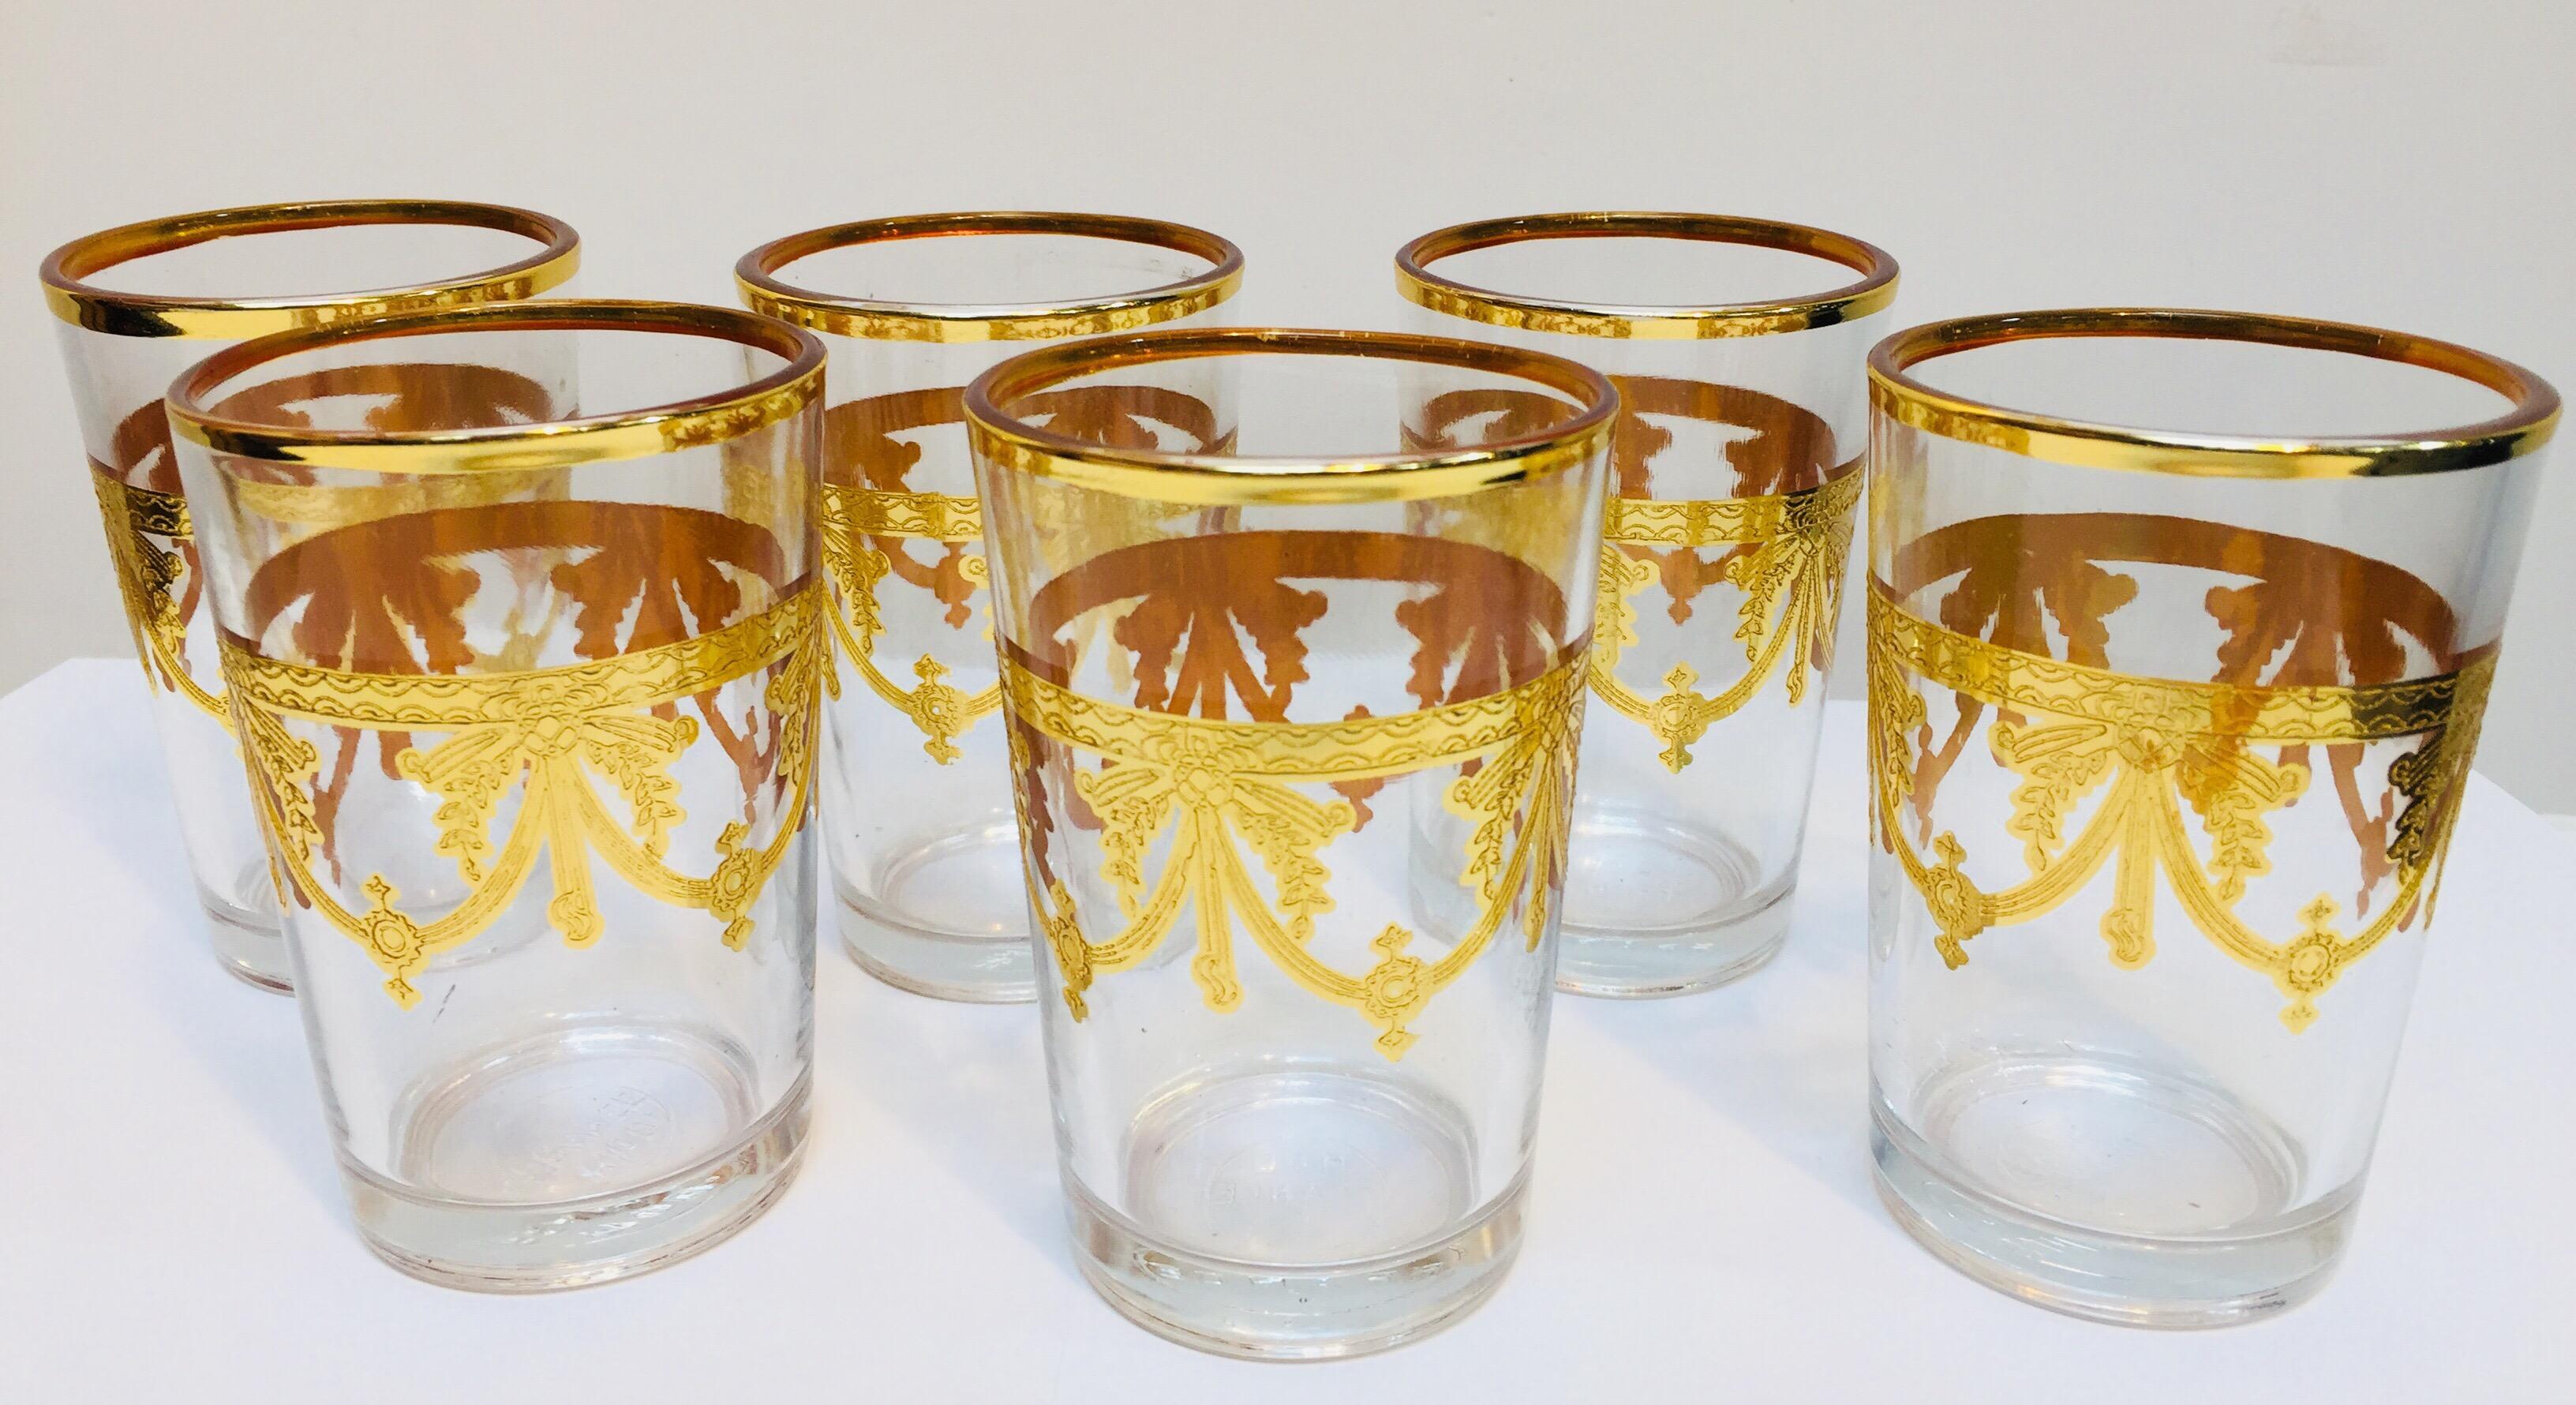 French Set of Six Moorish Glasses with Gold Raised Overlay Design